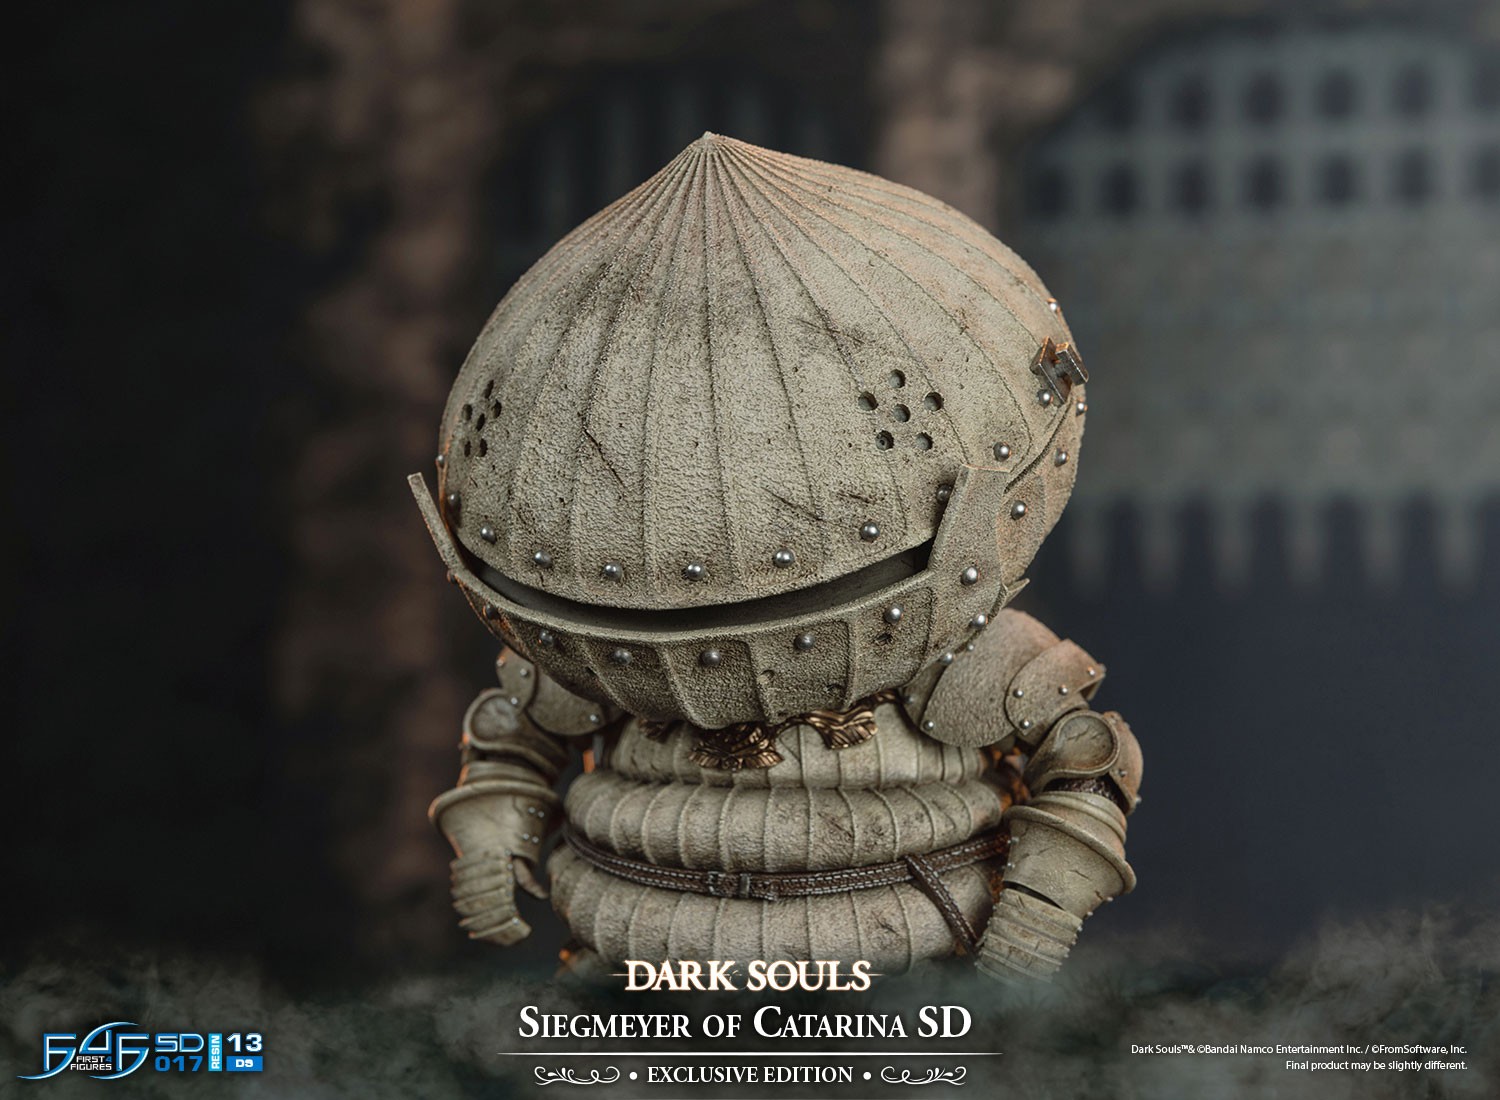 Dark Souls - Siegmeyer of Catarina SD (Exclusive Edition)